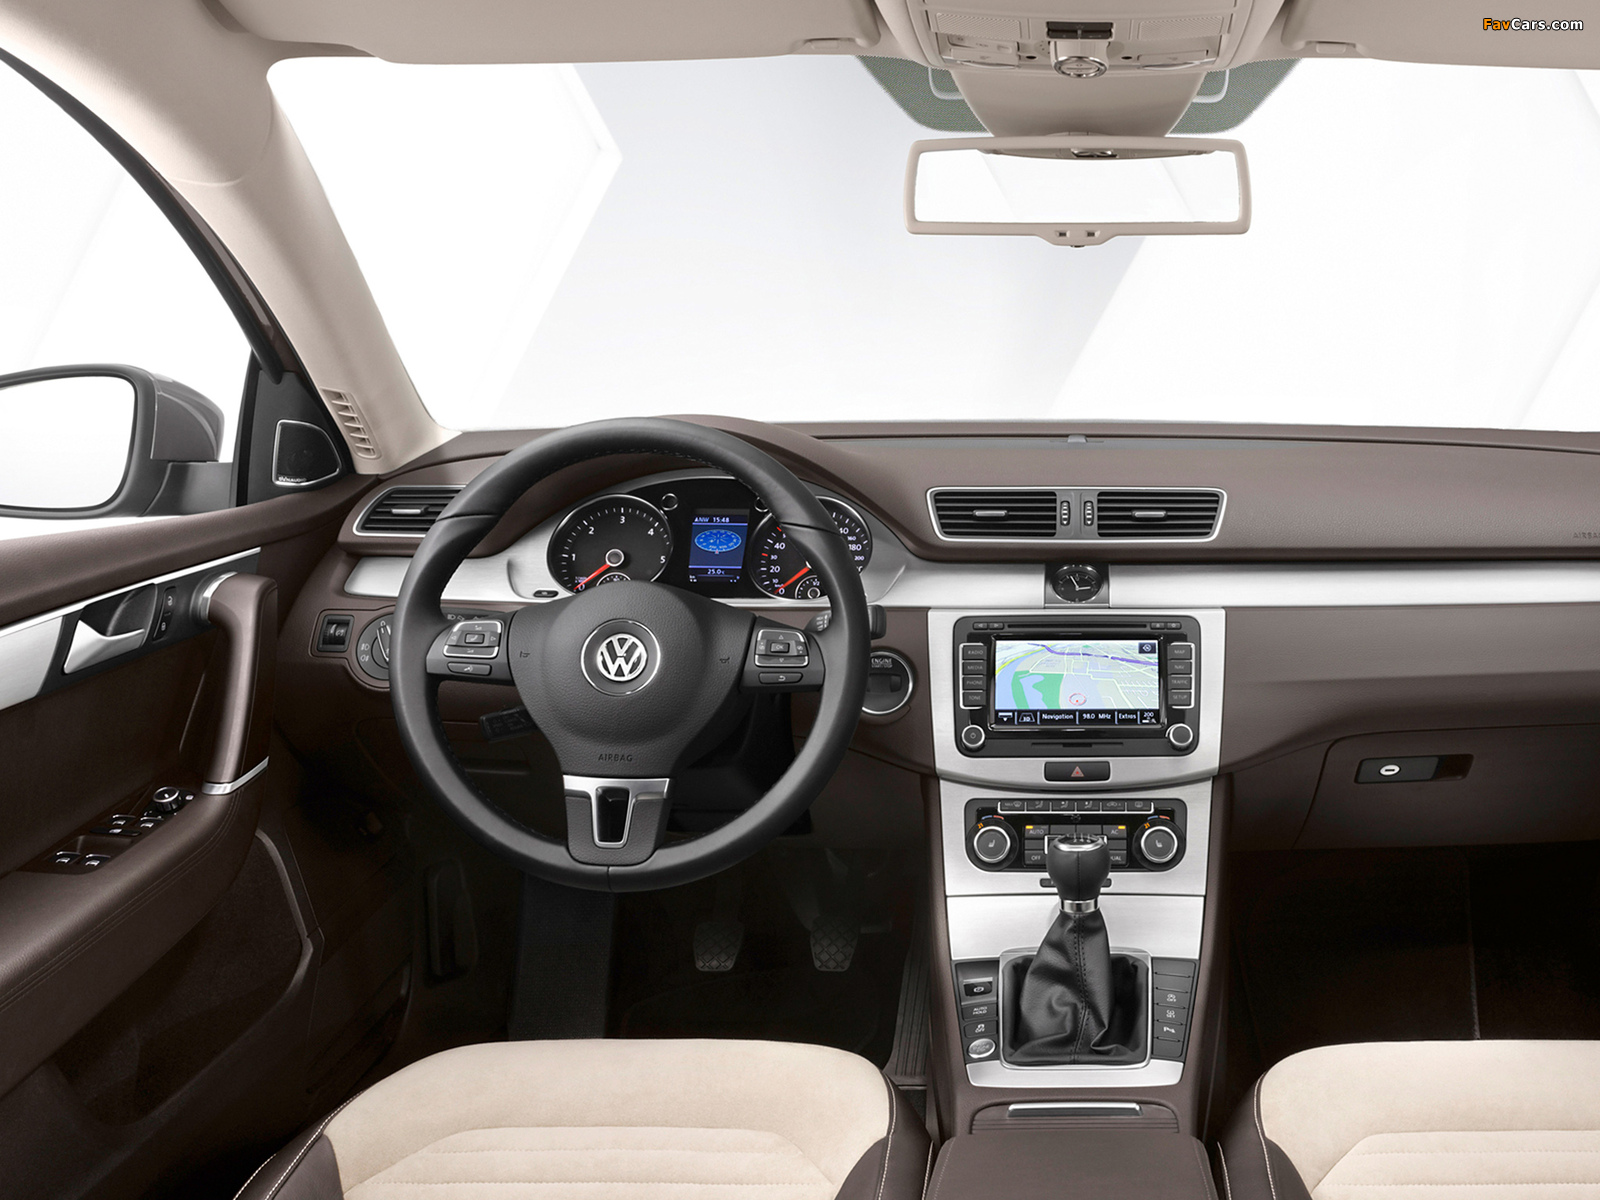 Volkswagen Passat TSI (B7) 2010 images (1600 x 1200)